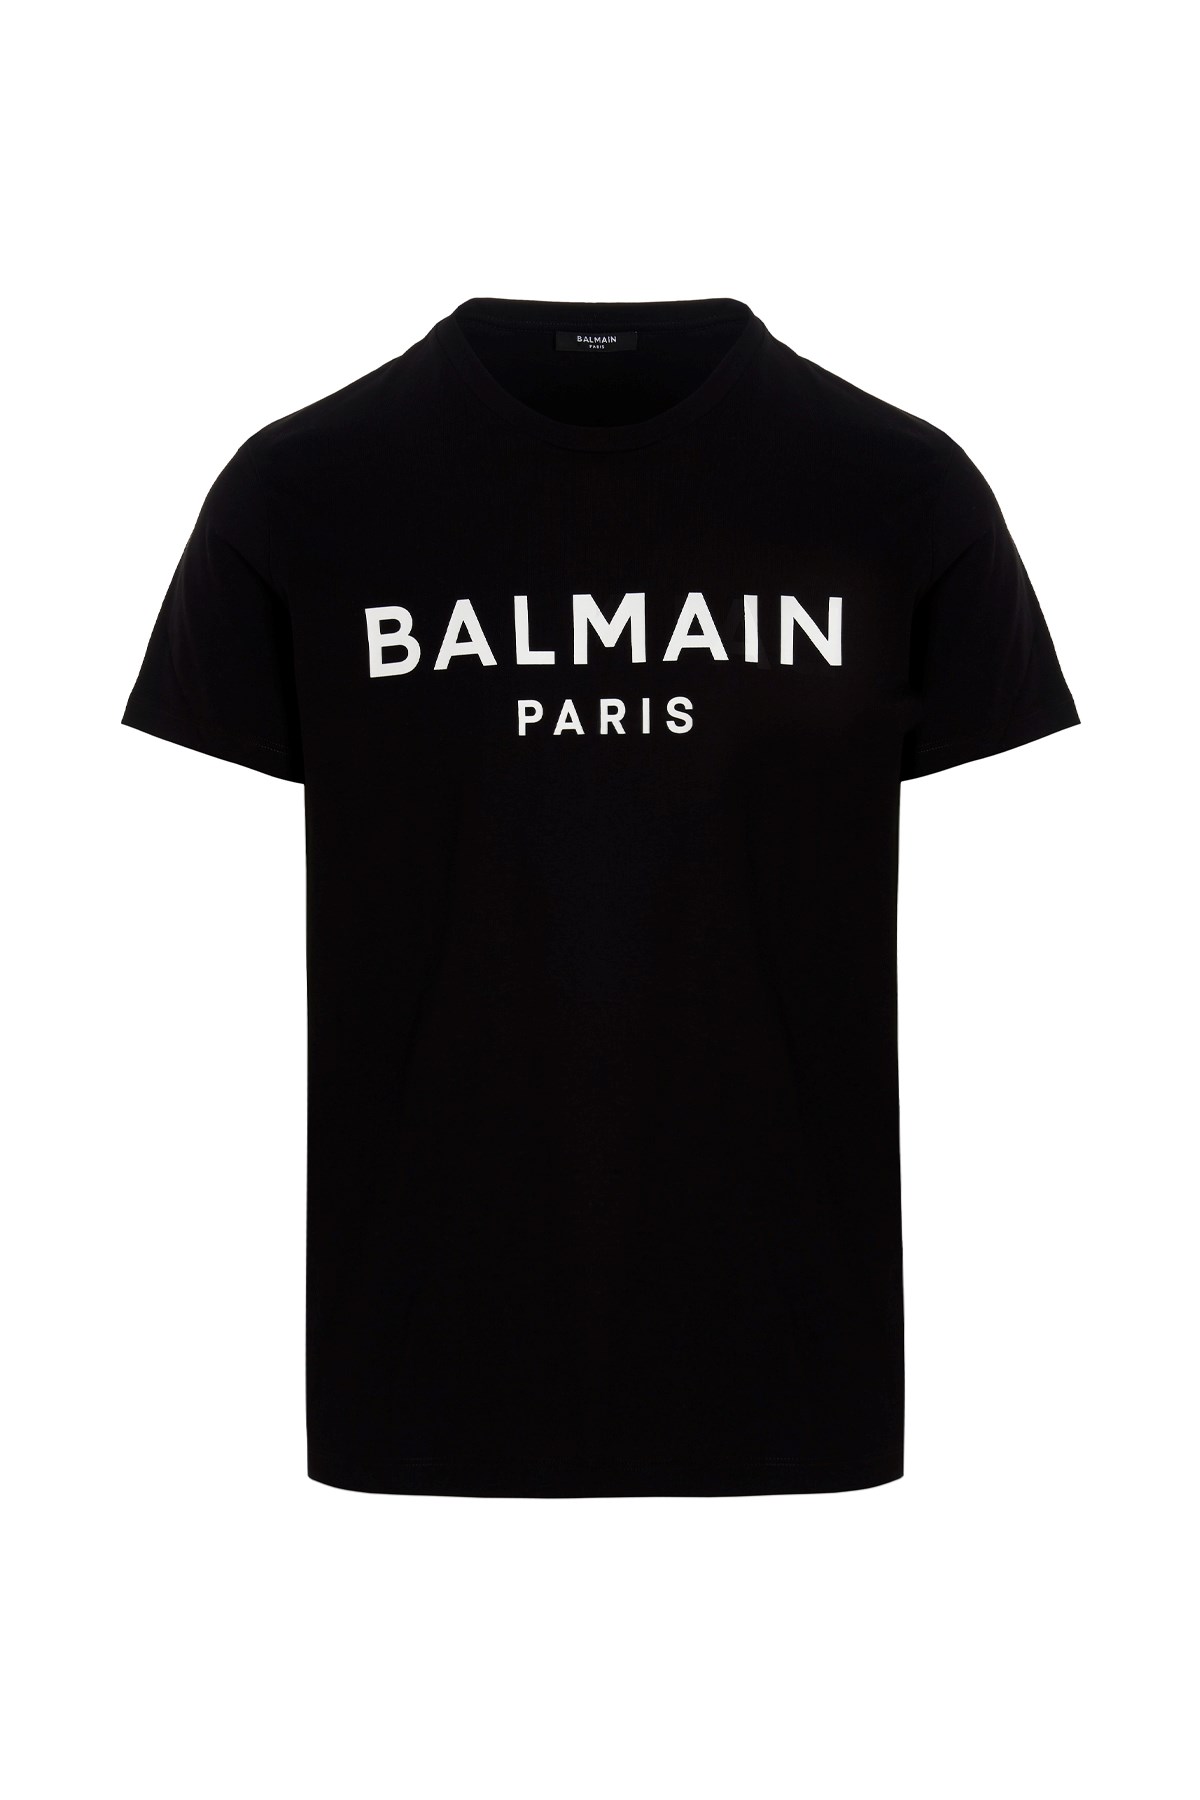 BALMAIN Logo Print T-Shirt